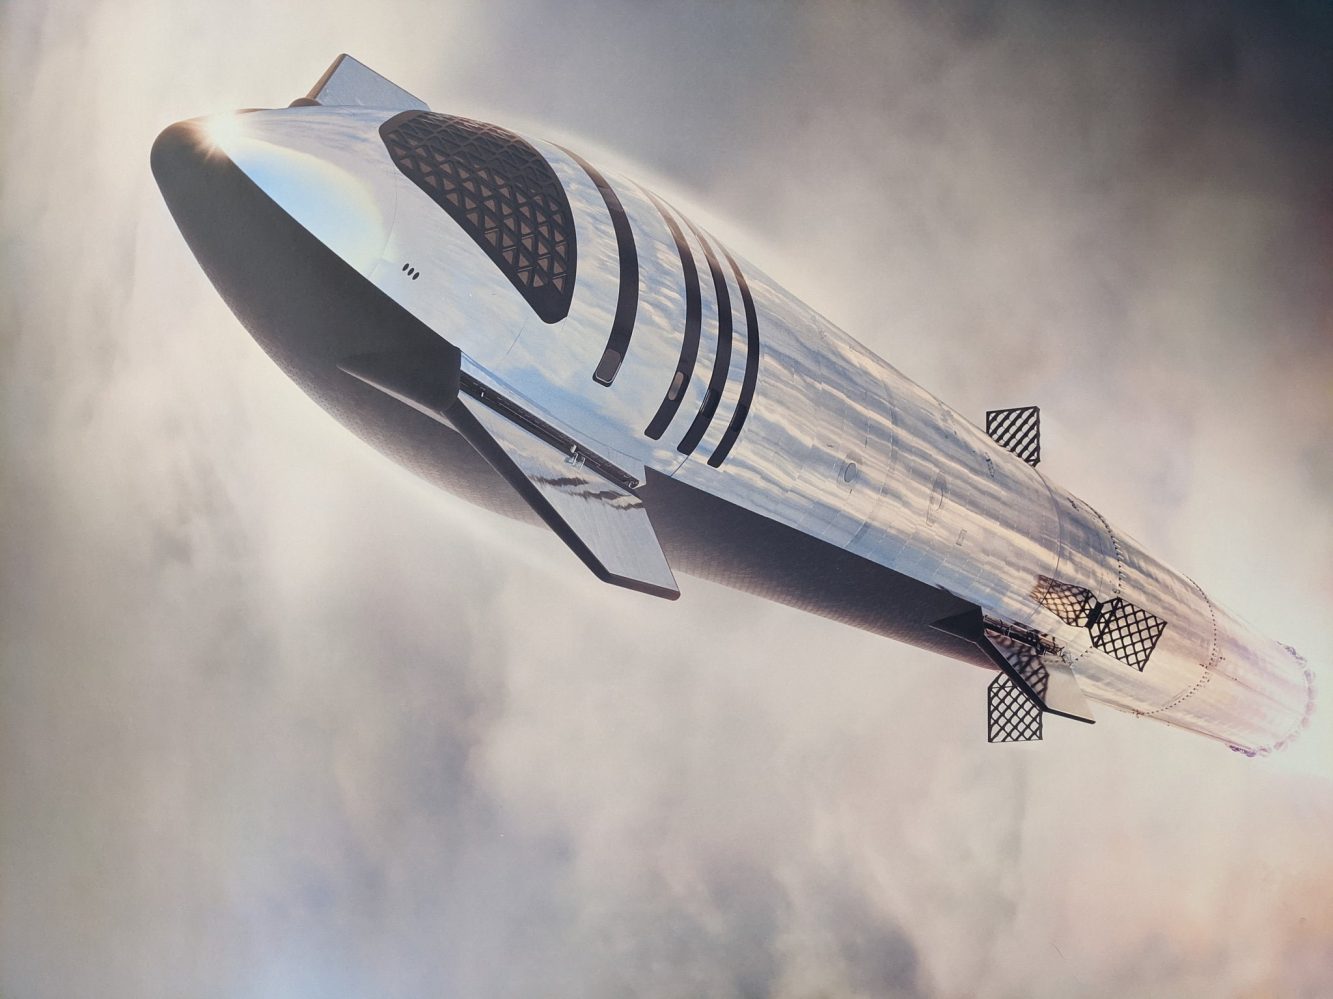 SpaceX Render of Starship in flight.